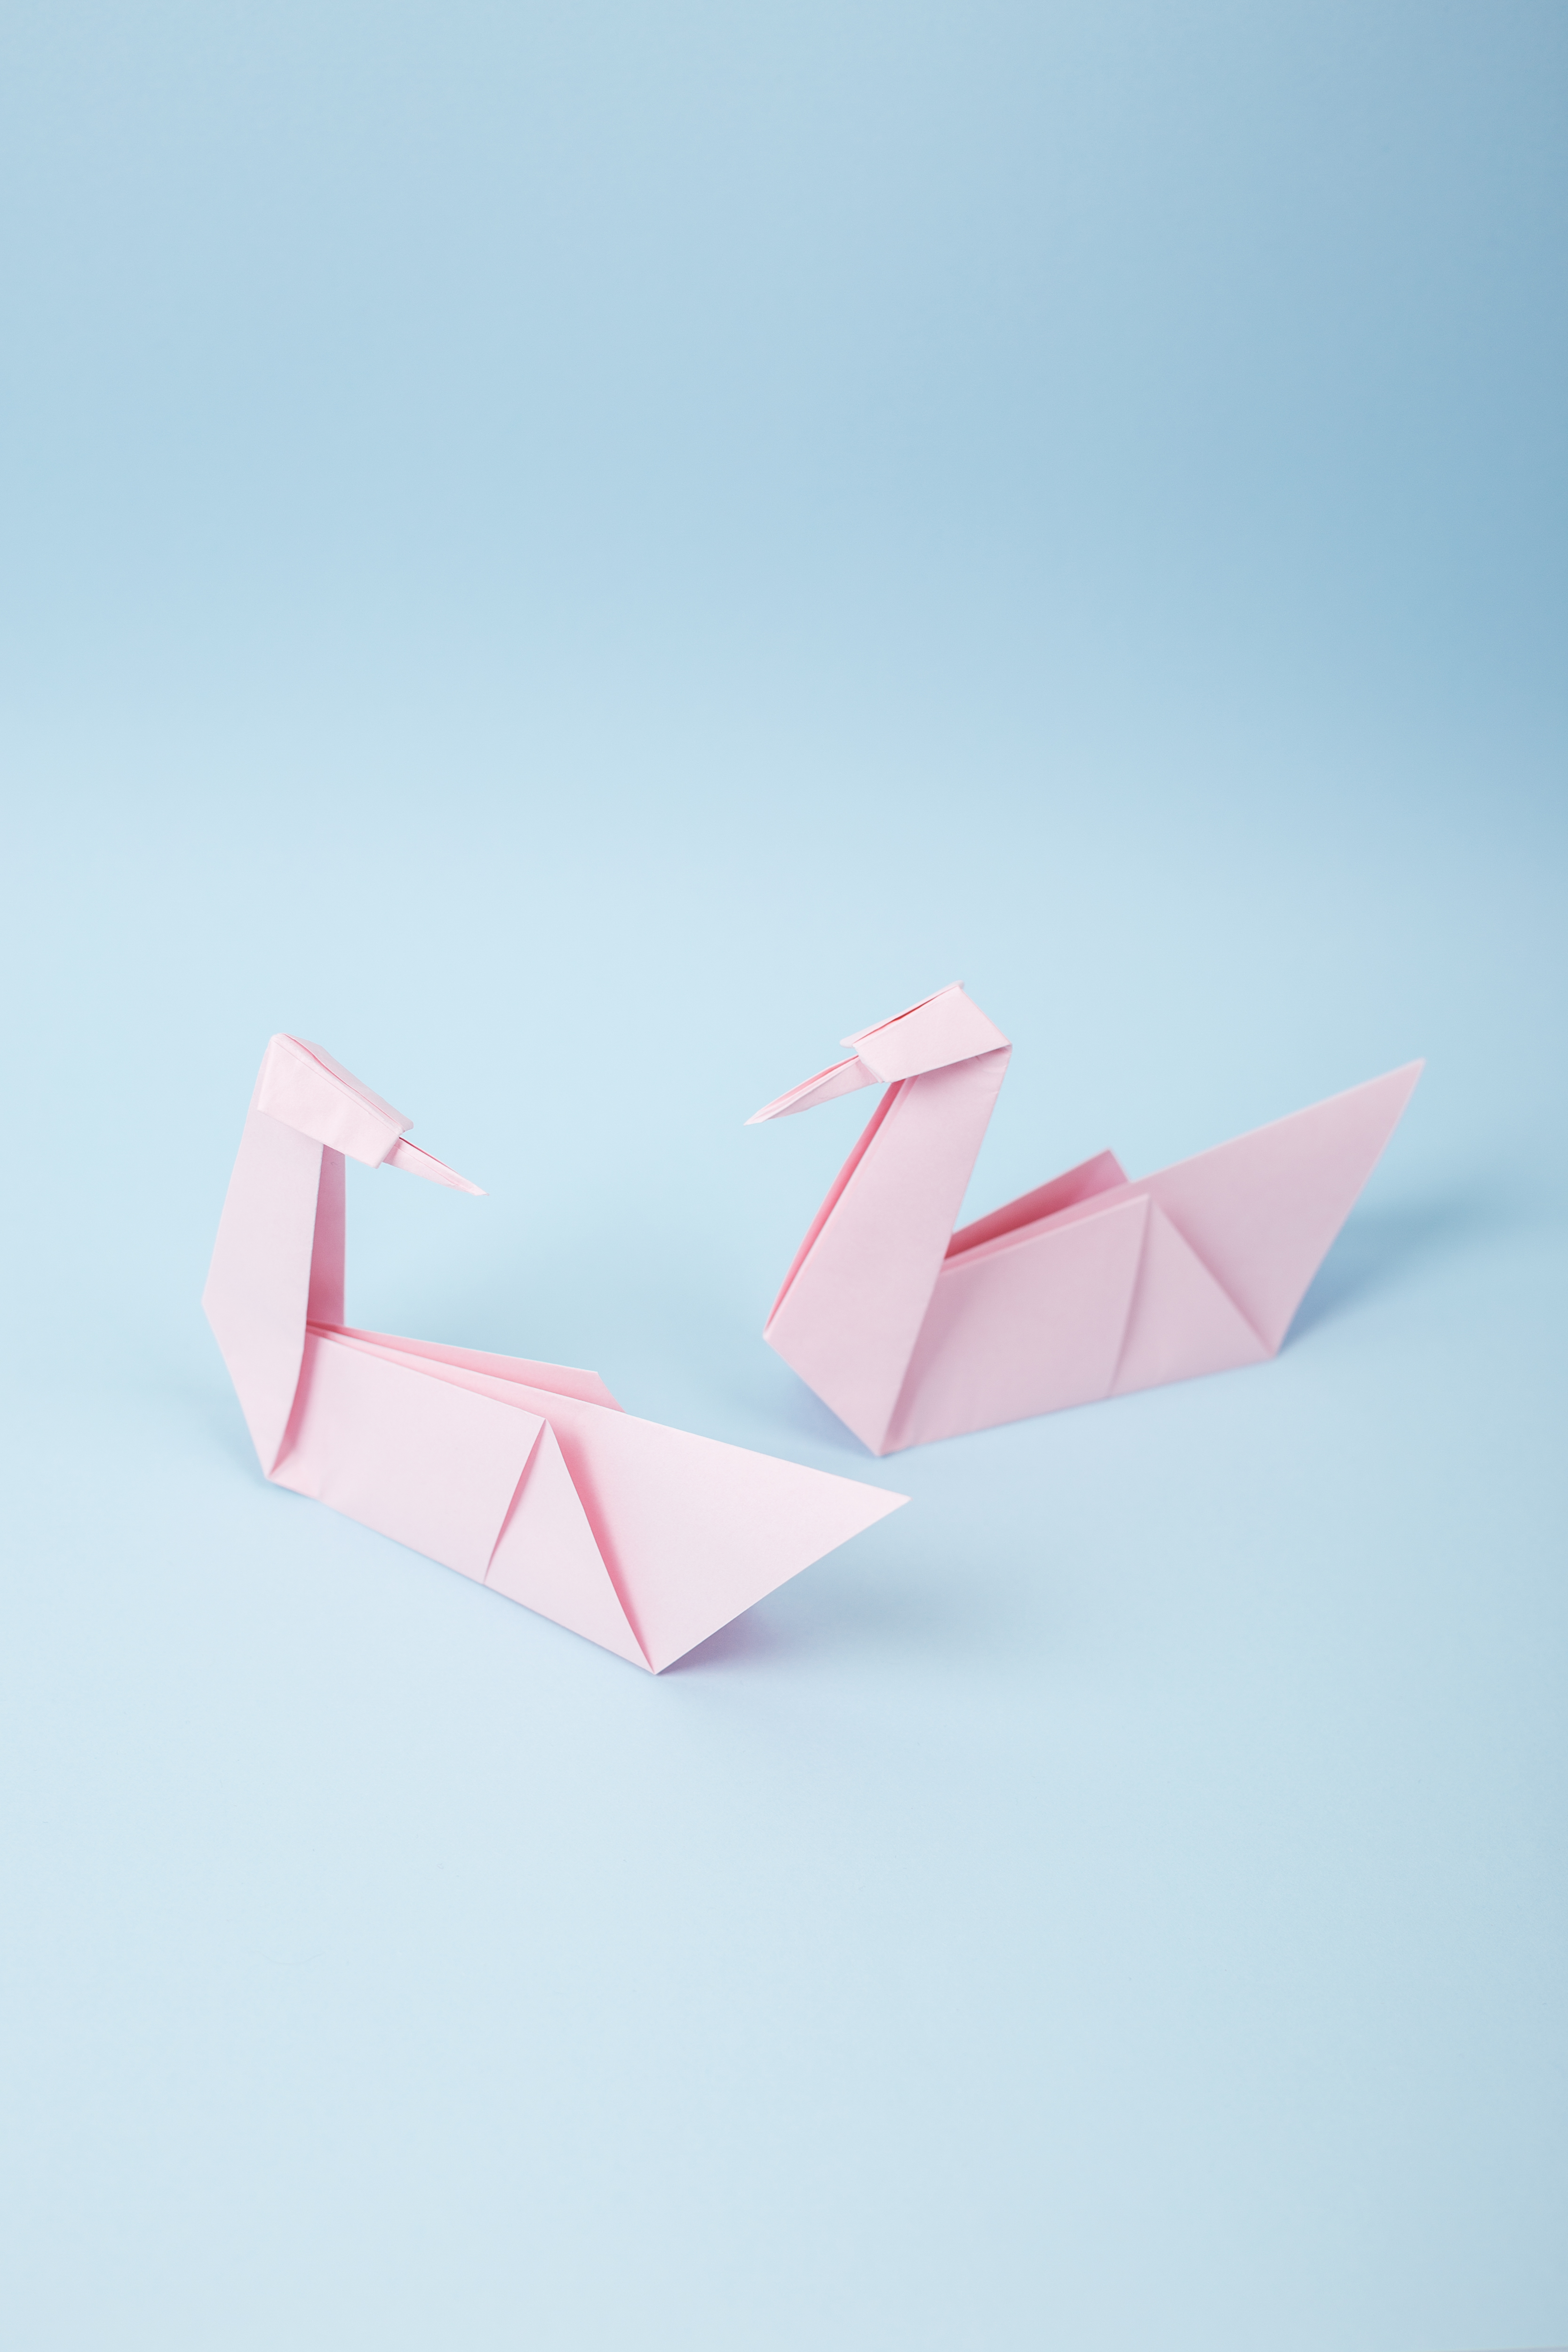 3d origami design swan